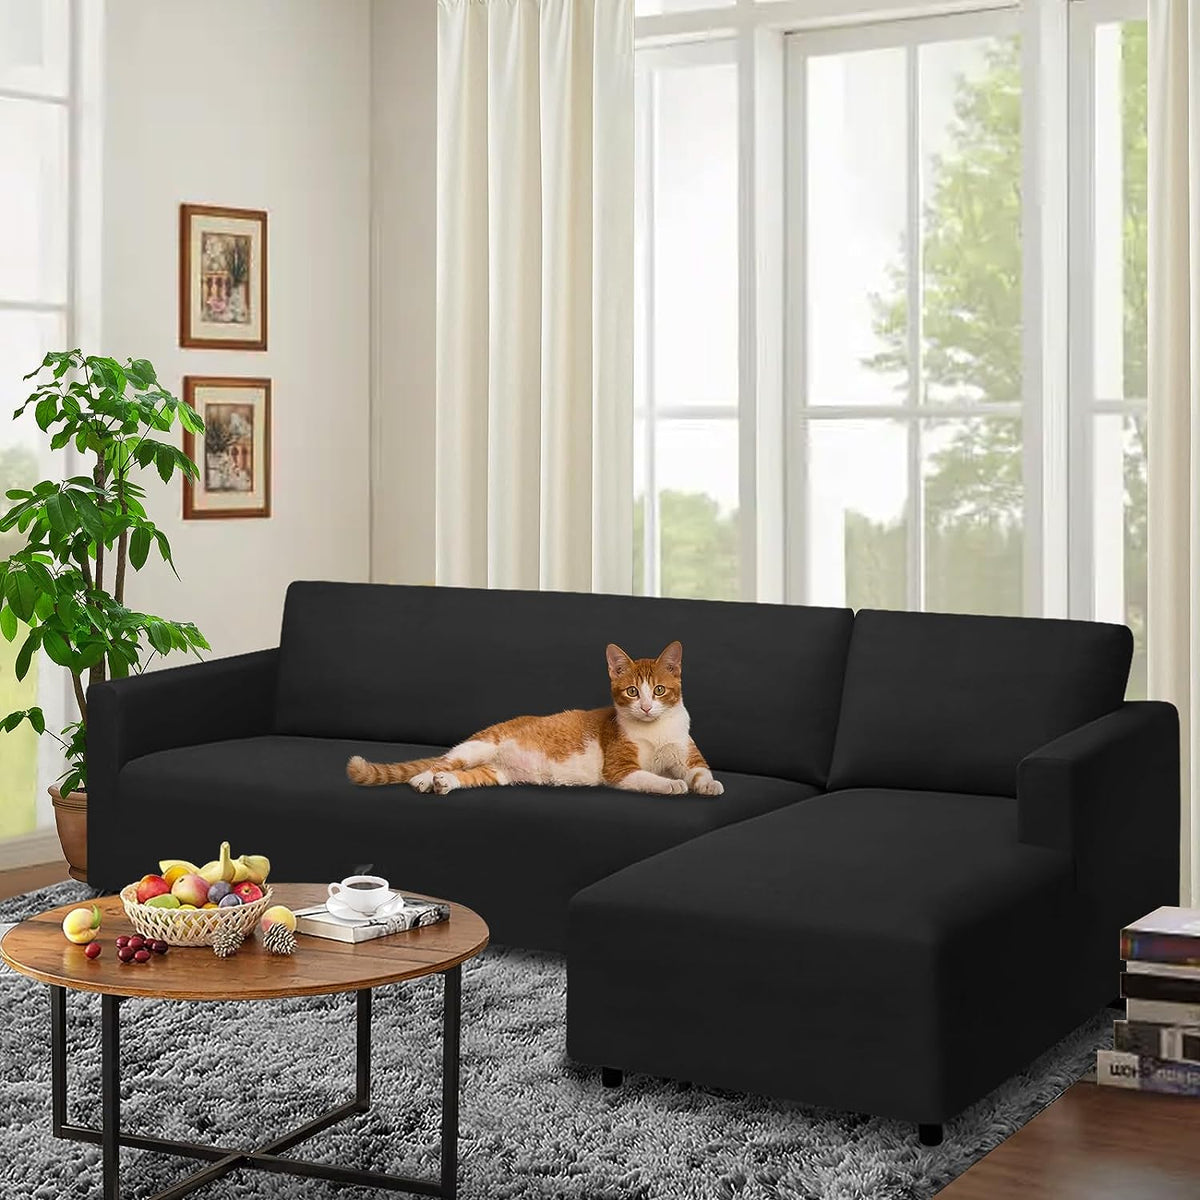 Juego de 2 fundas elásticas 100% impermeables para sofá modular en forma de L